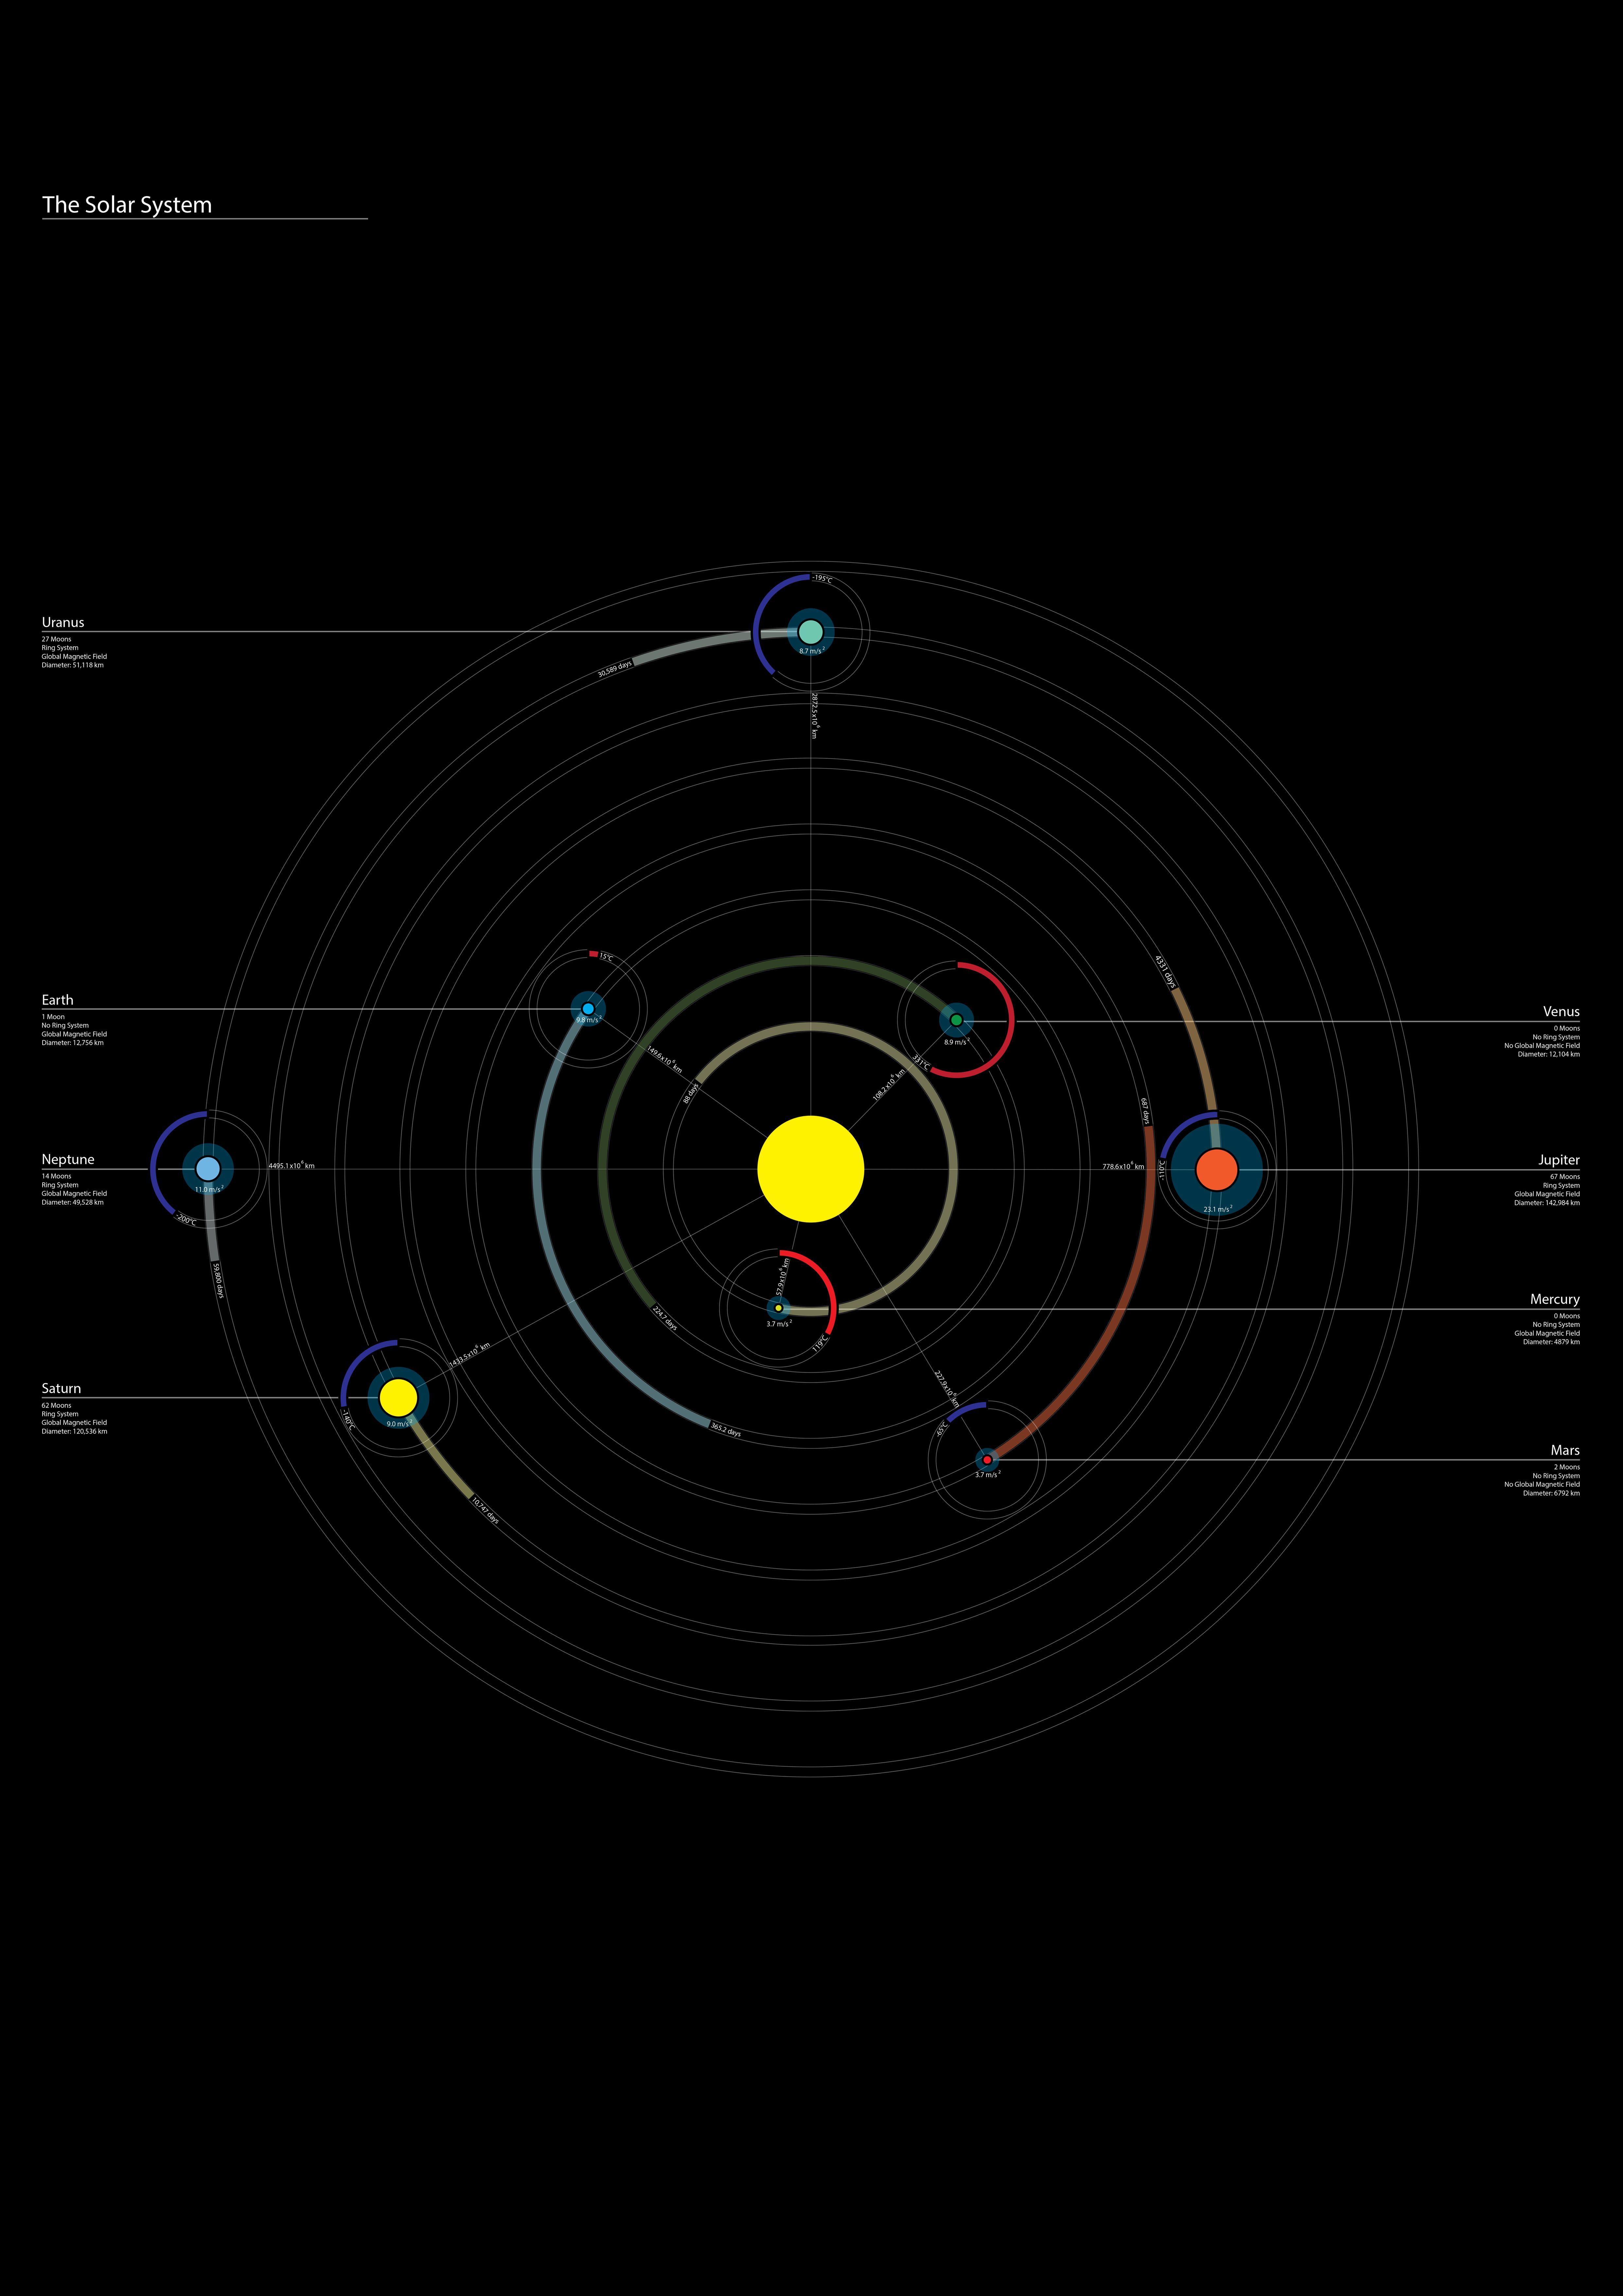 Solar System Infographic By Jon Newman. Art wallpaper, Infographic, Wallpaper